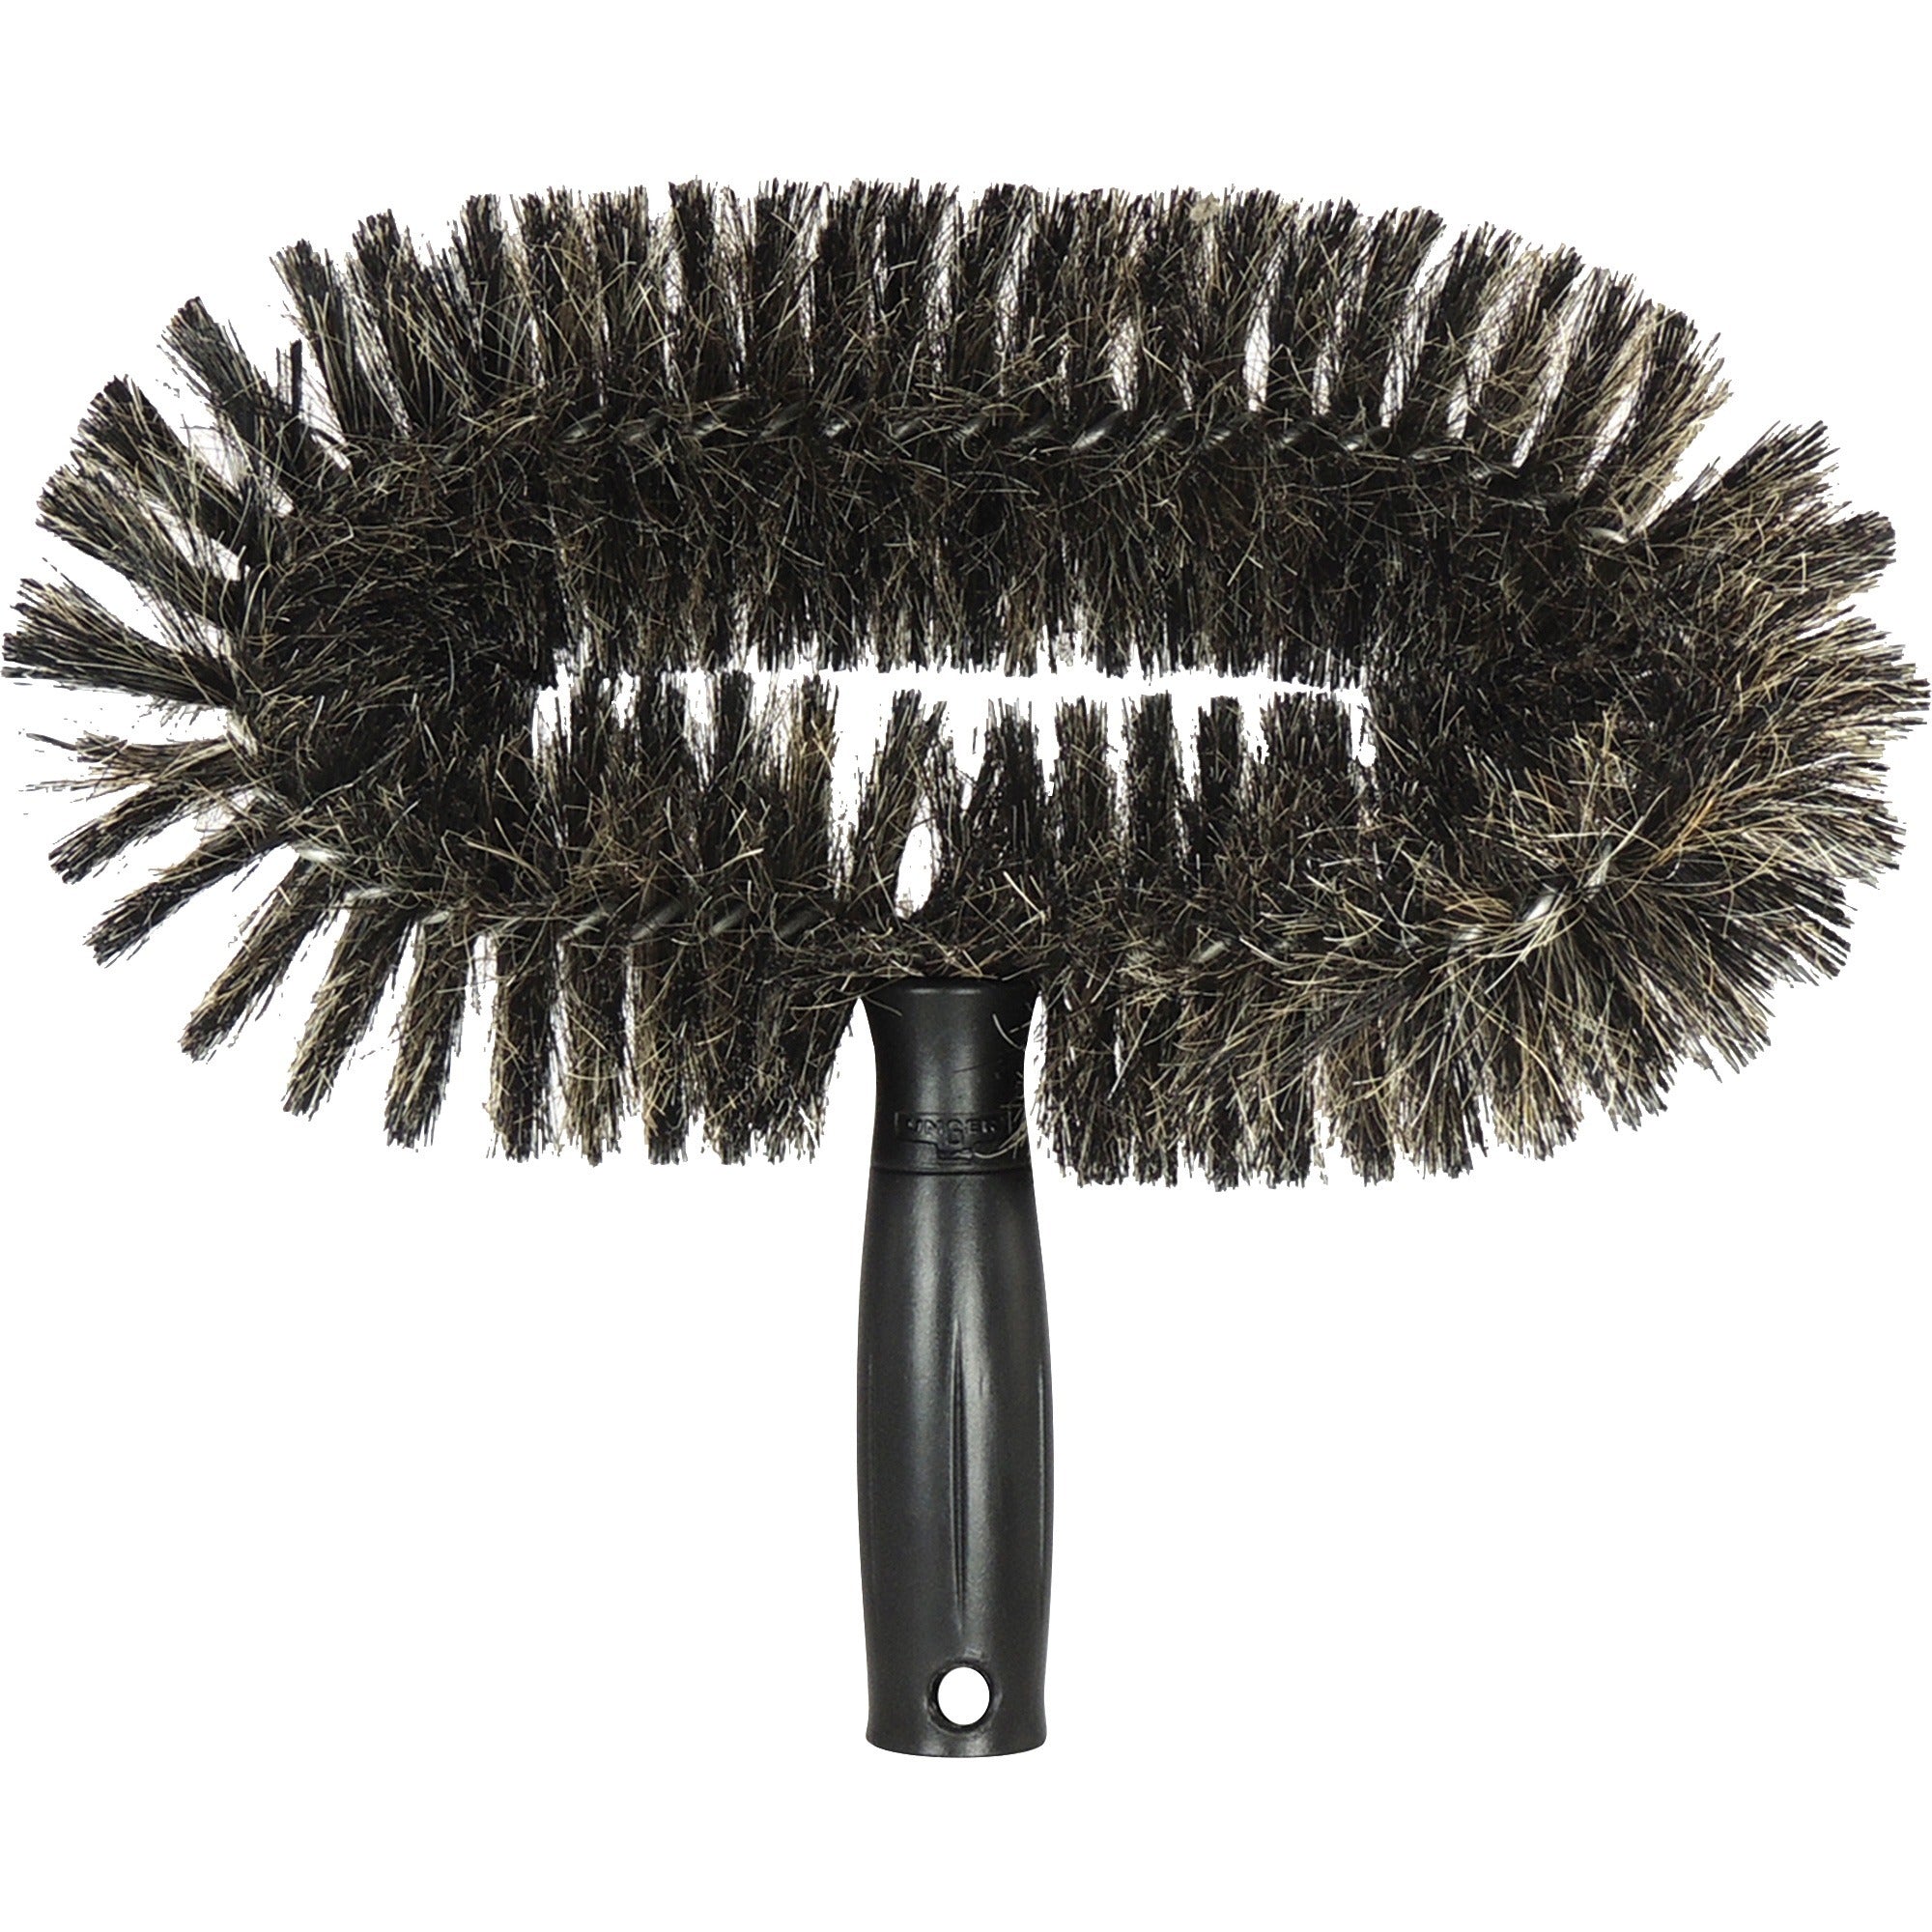 Unger StarDuster WallBrush - Horsehair Bristle - 9.4" Overall Length - 1 Each - Black, Brown